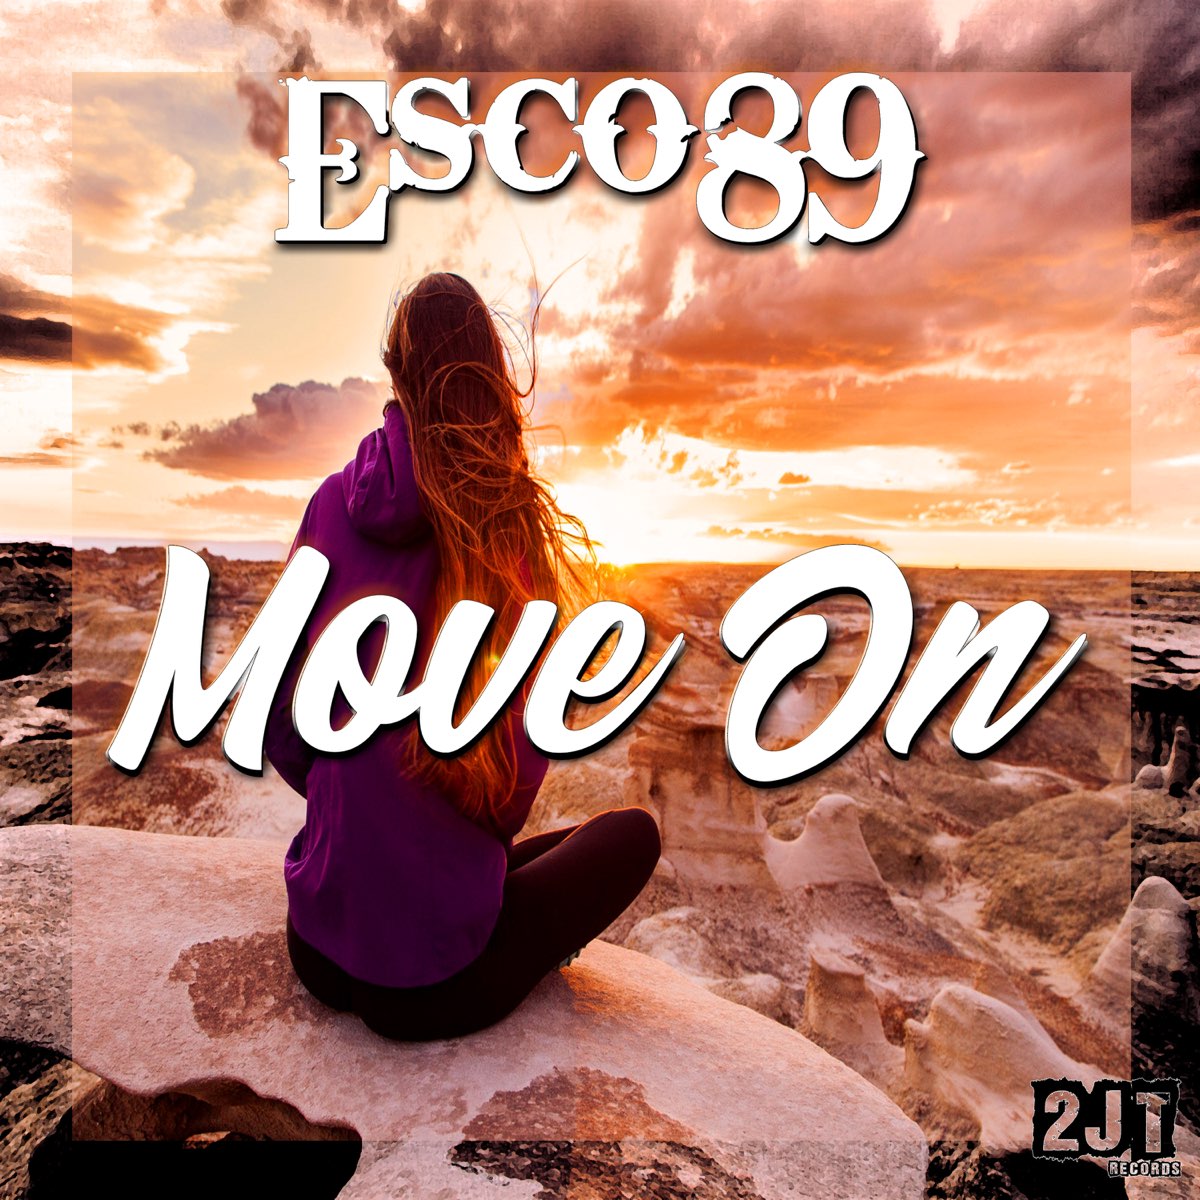 Move on. Move песня. Deeperise - move on. On the move. @Move on_88.